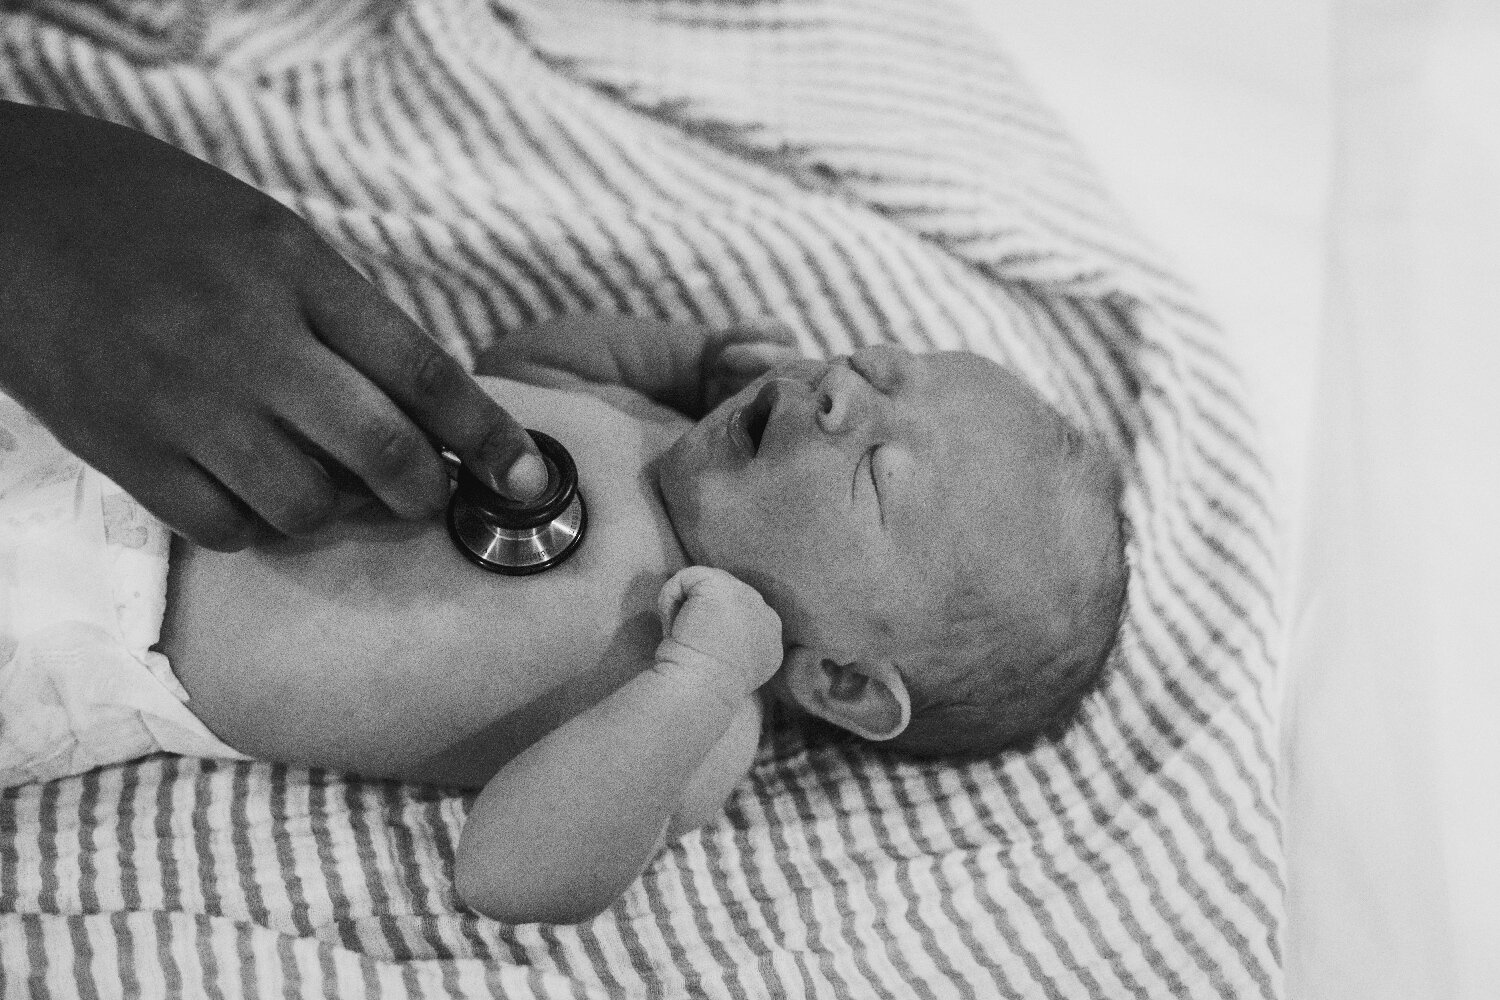 Stethescope-On-Baby-During-Newborn-Exam